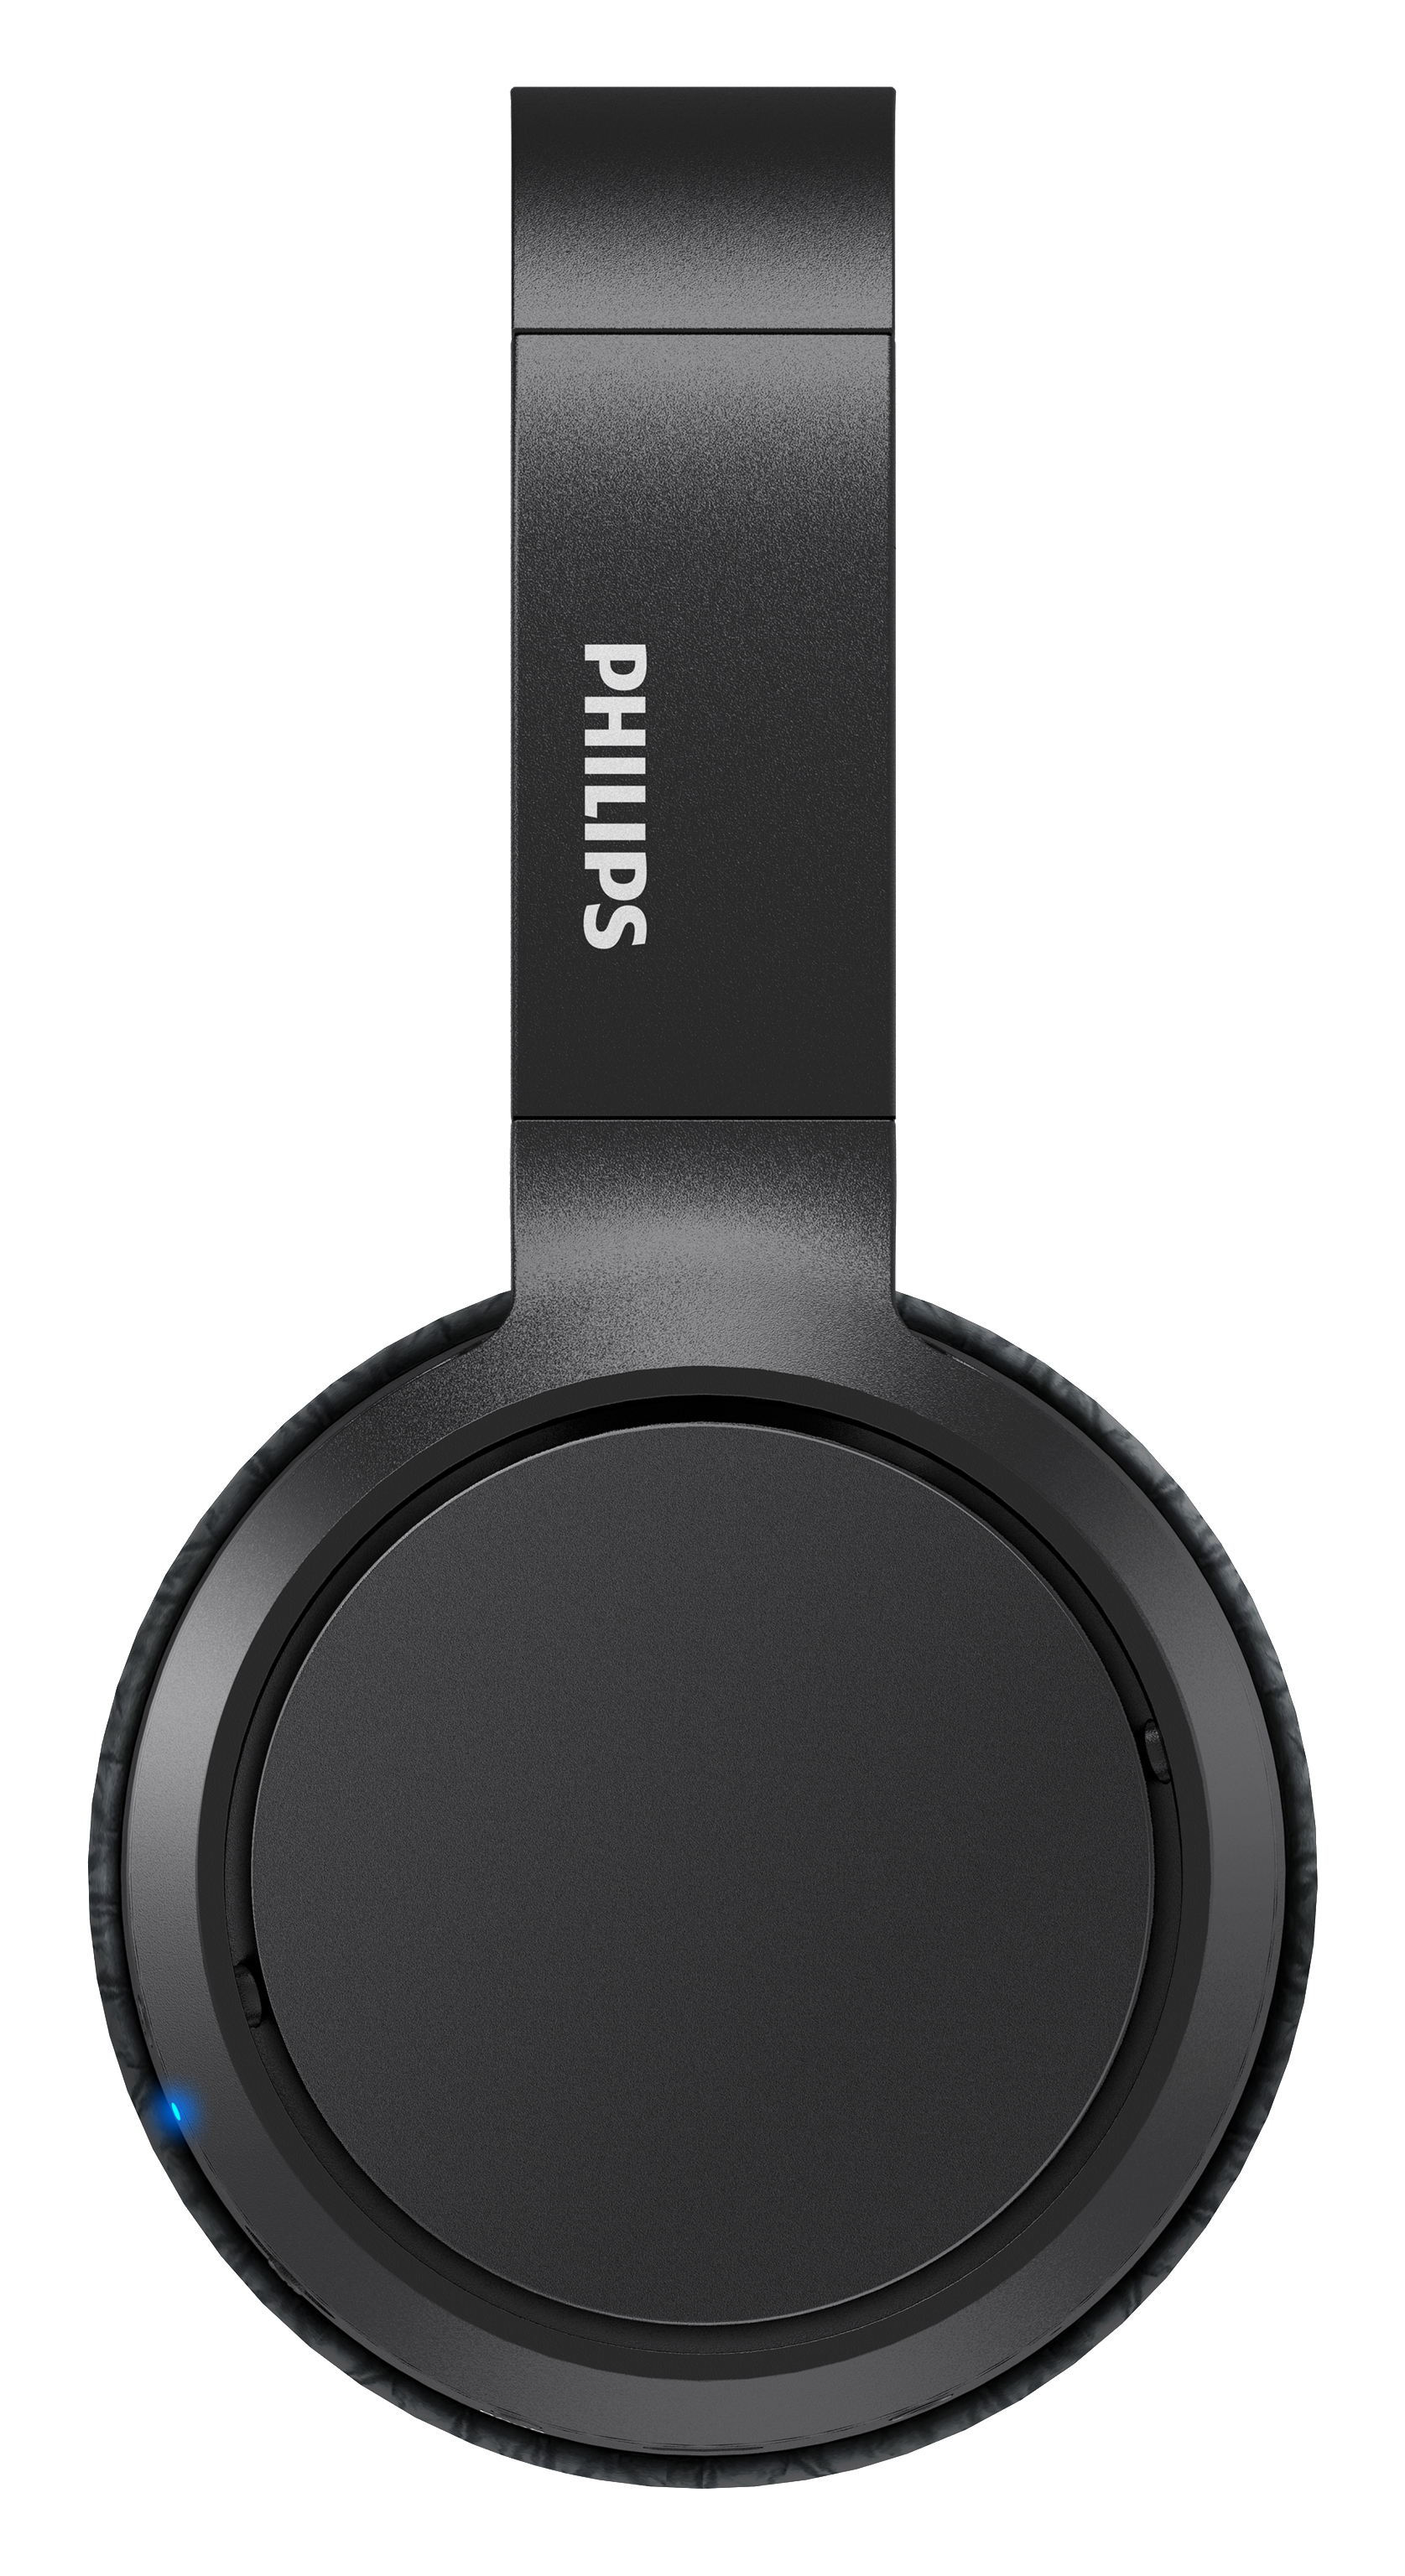 PHILIPS TAH5205BK/00, Over-ear Kopfhörer Bluetooth Schwarz